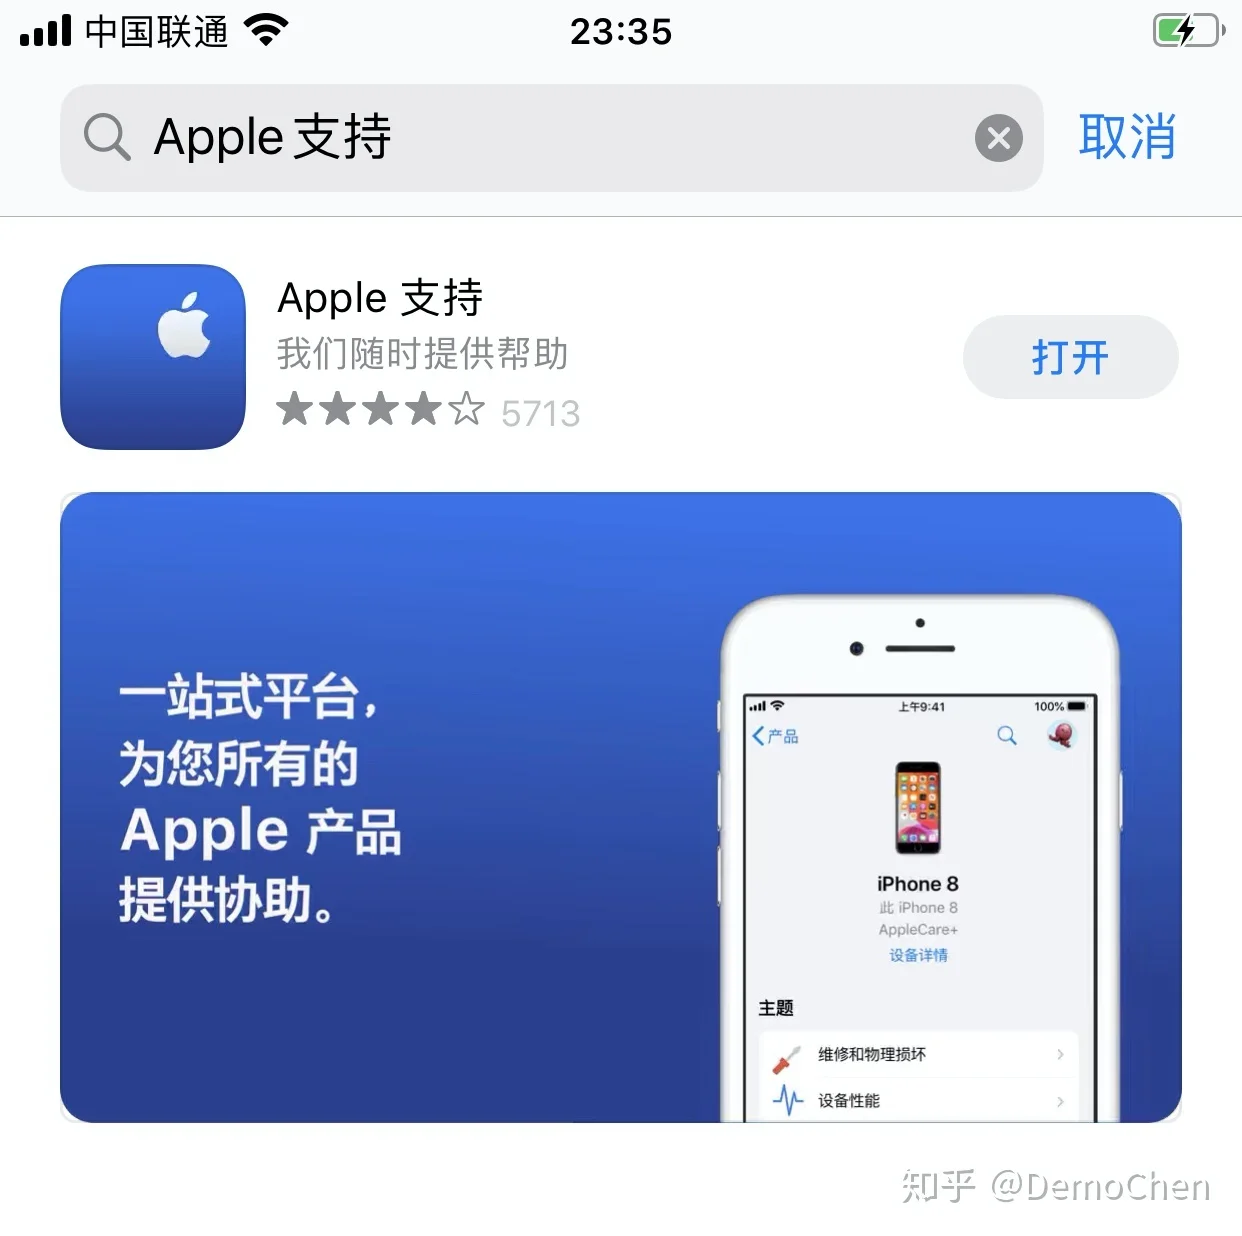 Apple支持 App